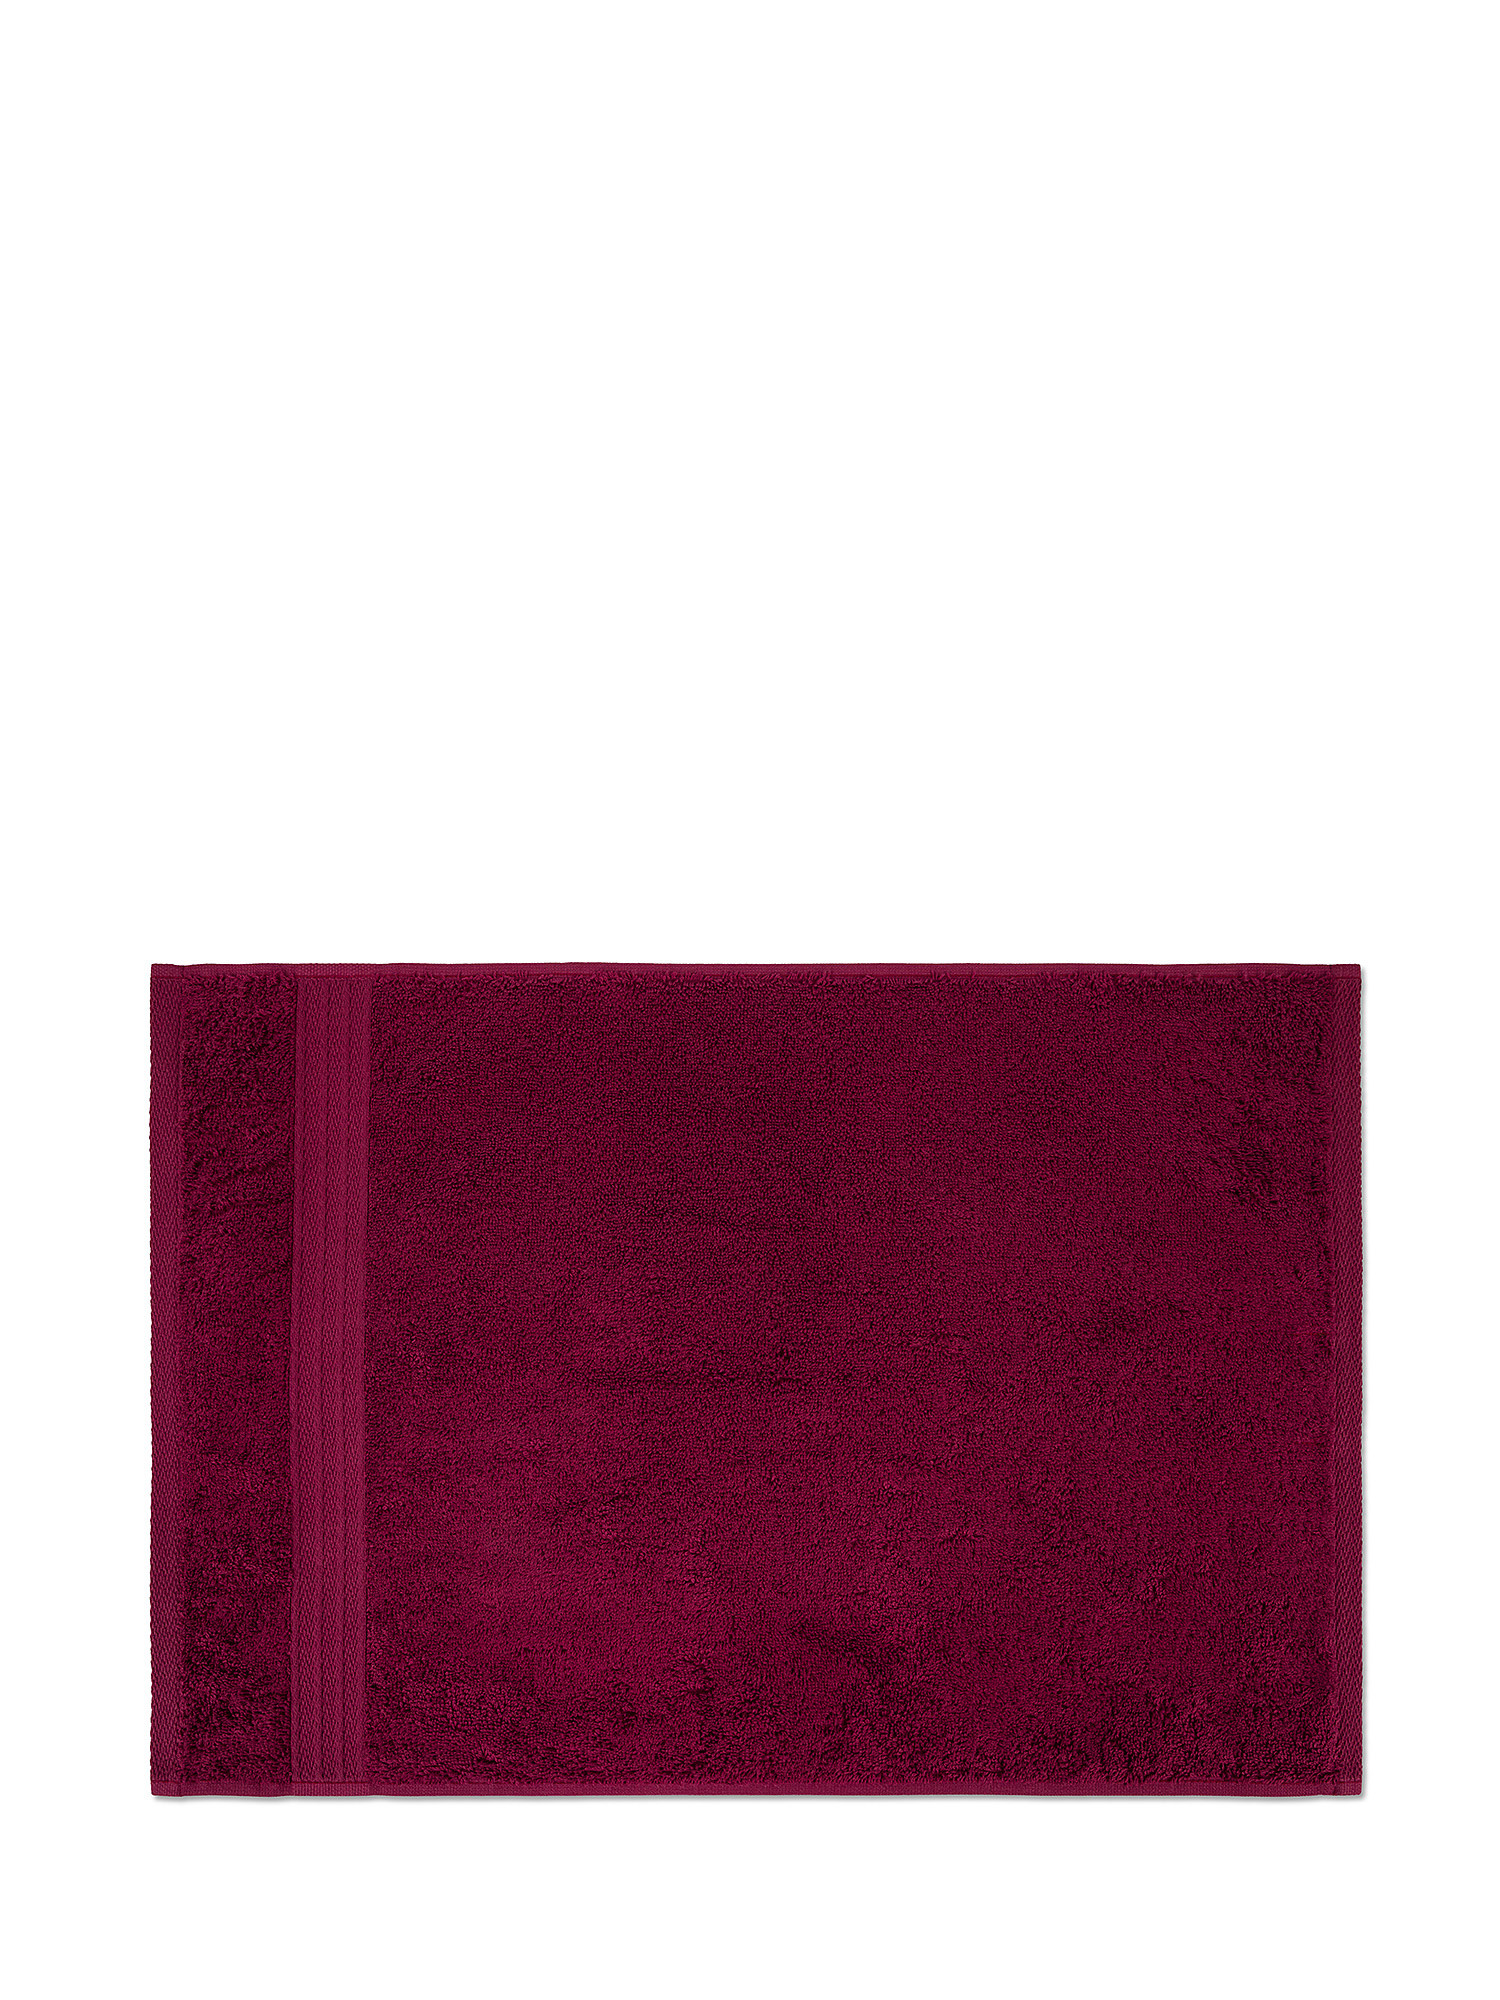 Asciugamano puro cotone tinta unita Zefiro, Rosso ciliegia, large image number 1